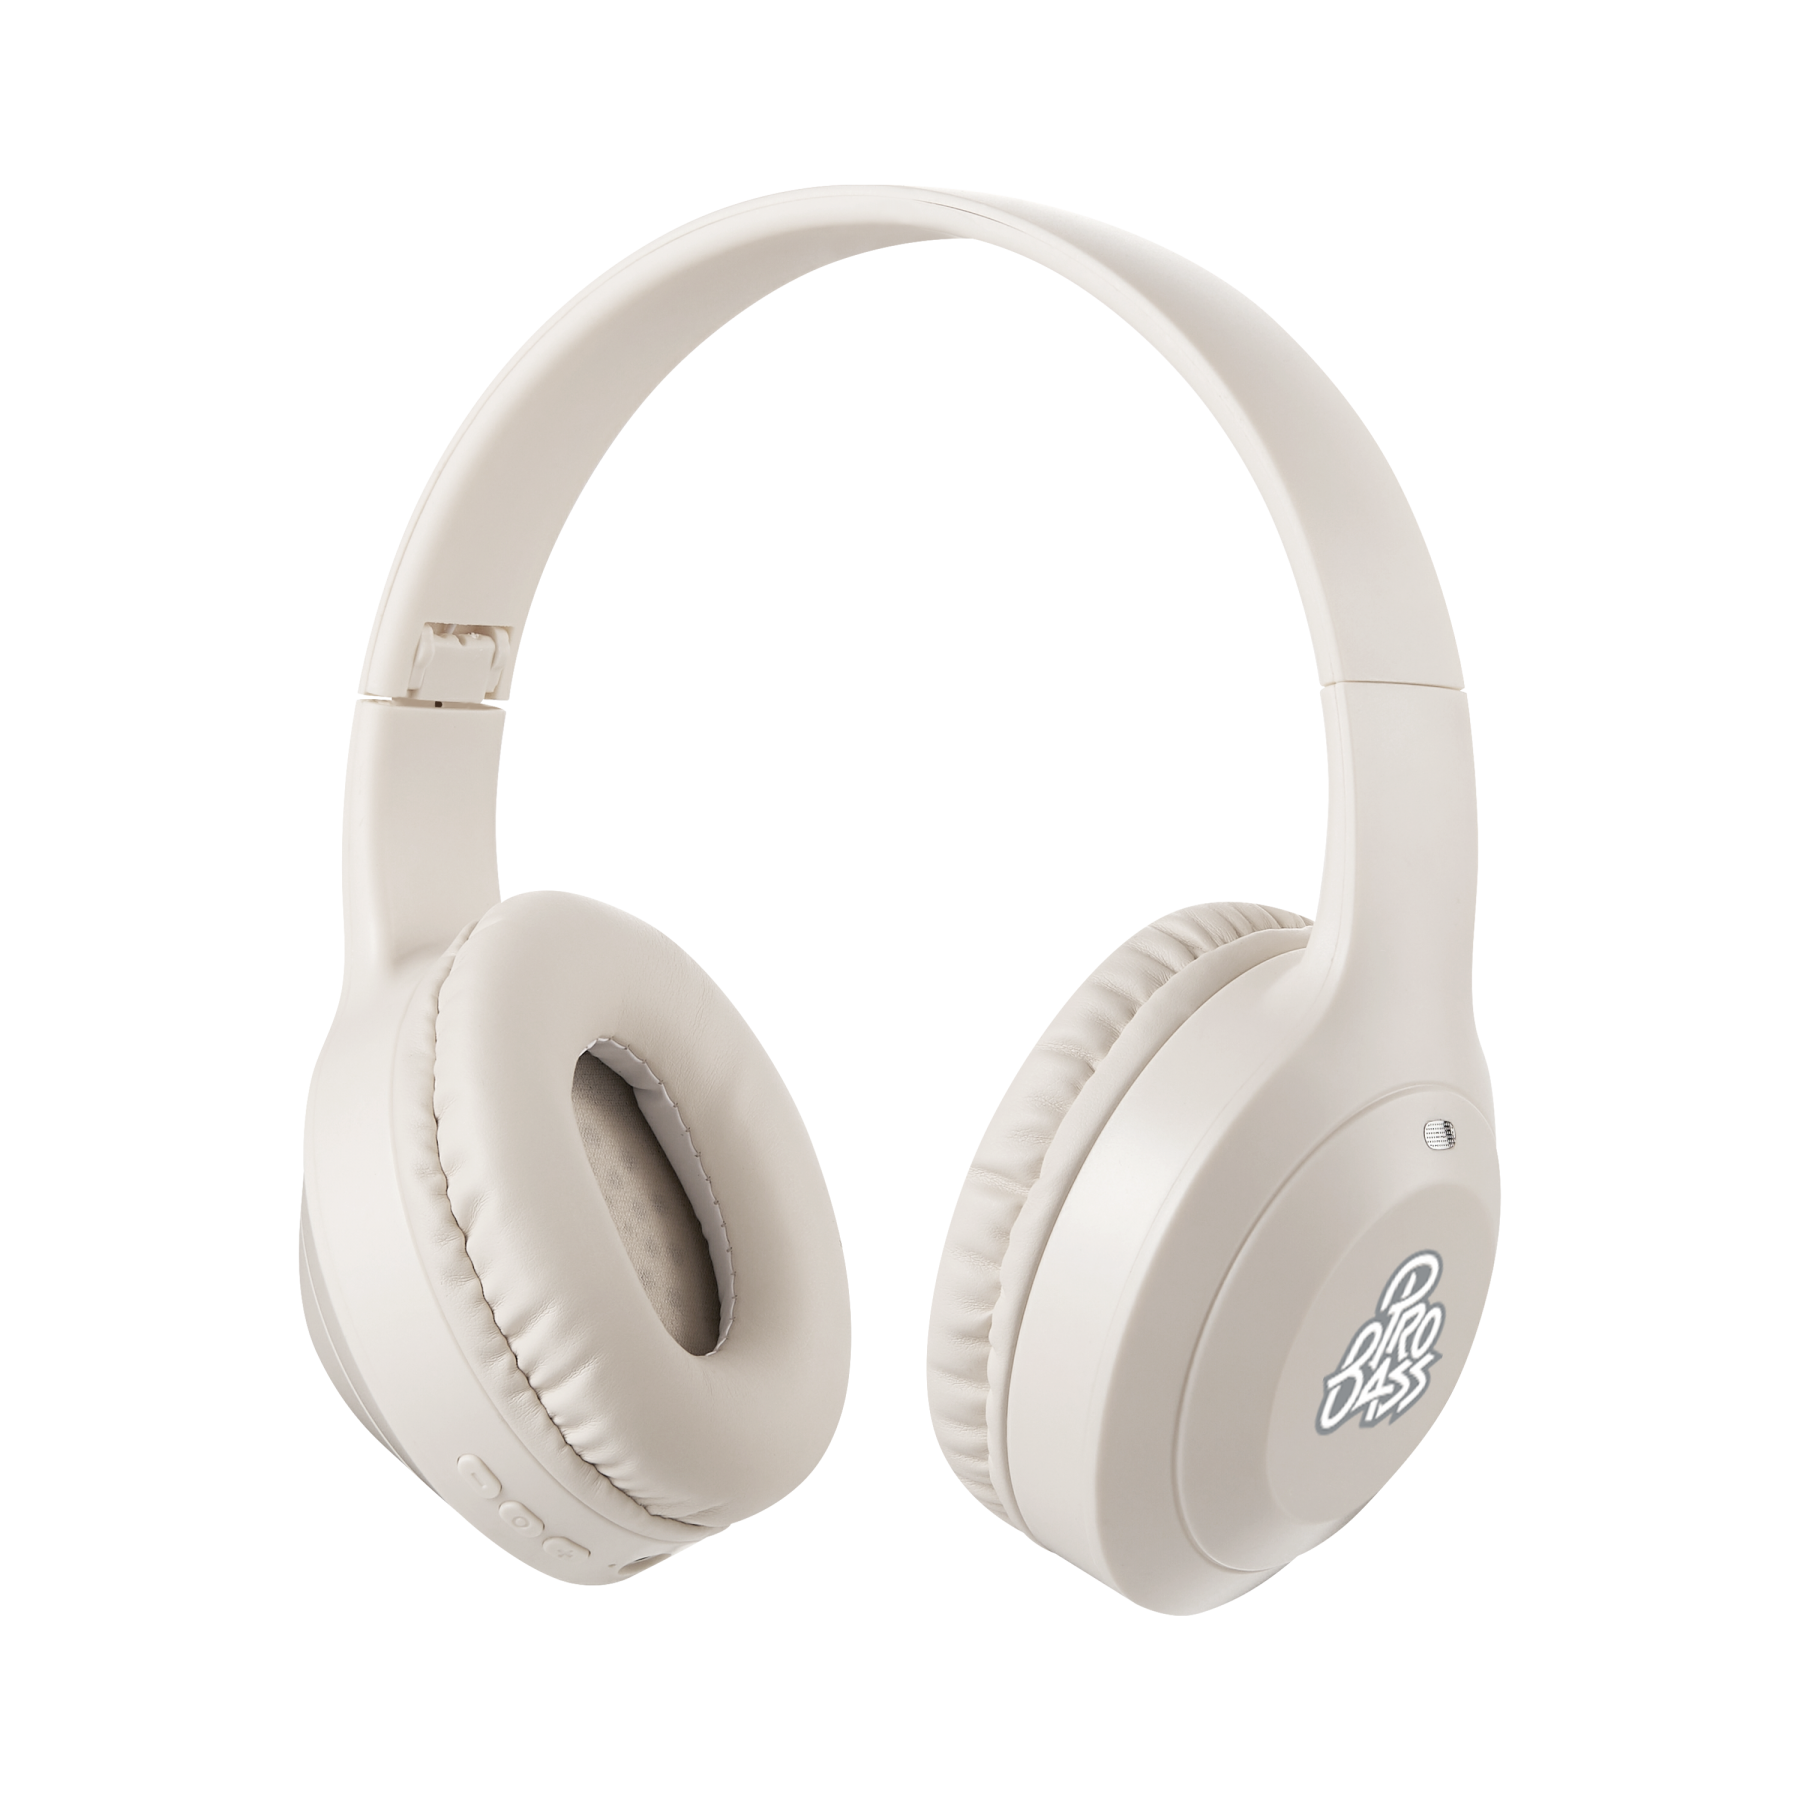 Pro Bass Renegade Series Bluetooth Headphone  - Nude